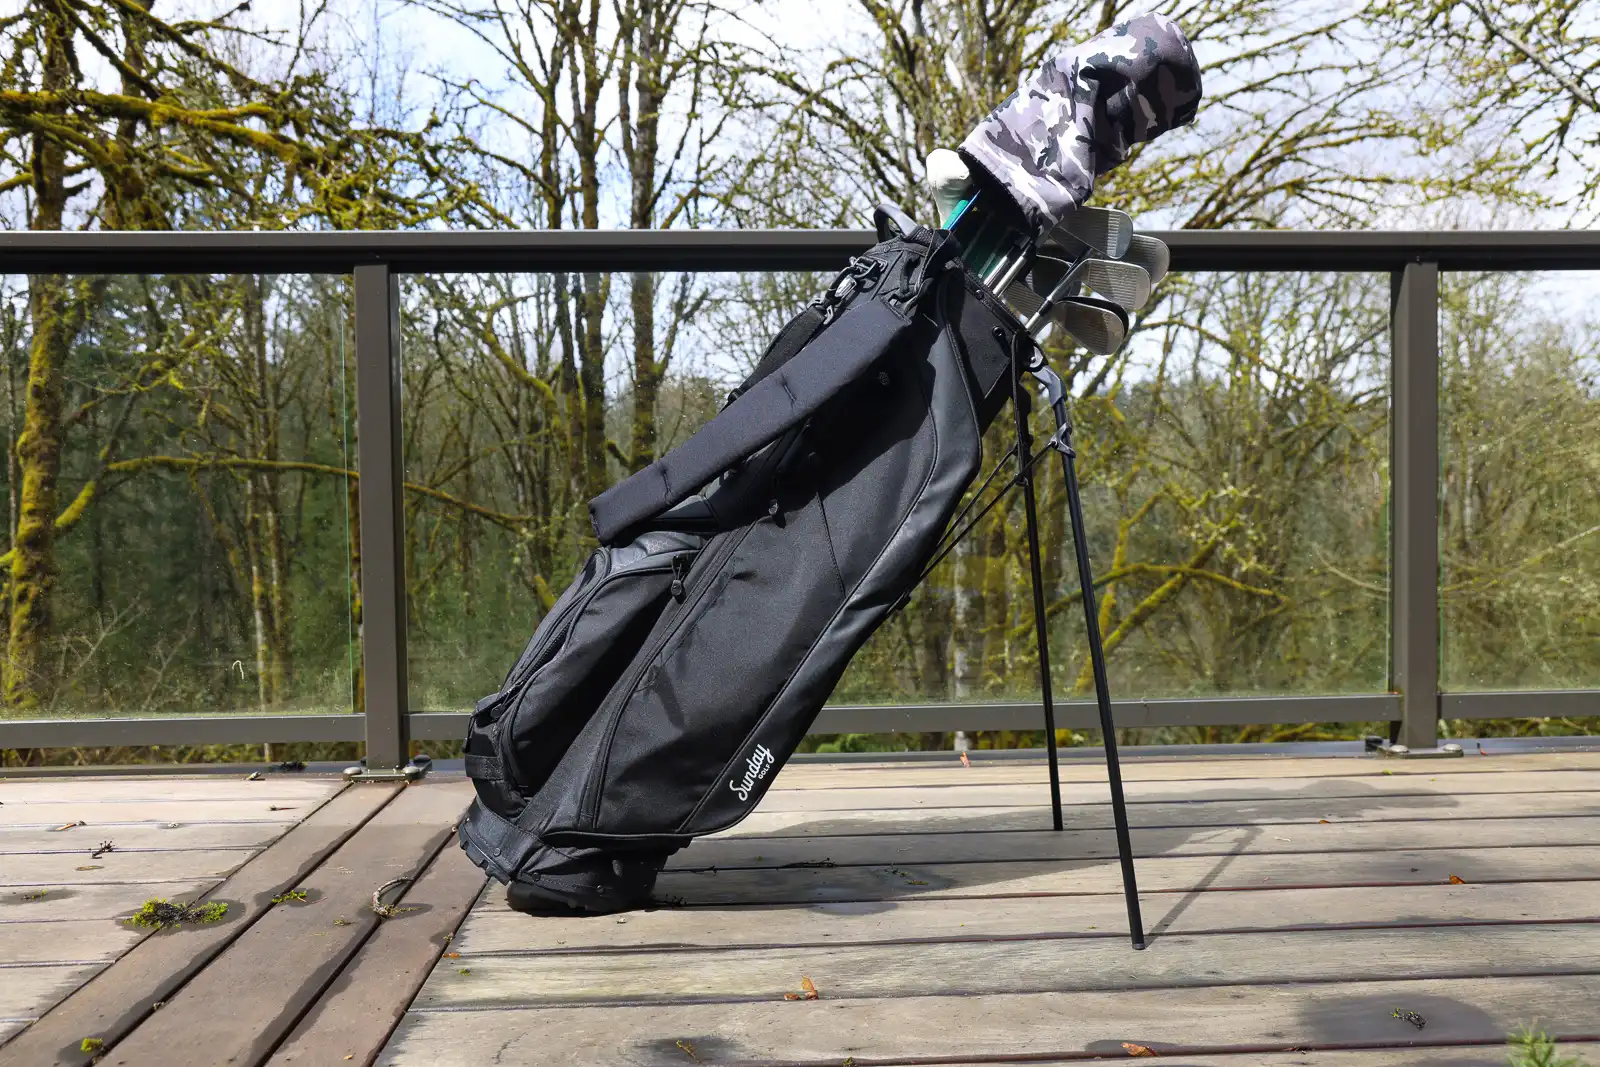 Sunday Golf Ryder Bag - Use Coupon Code "BE15" to Save 15%!